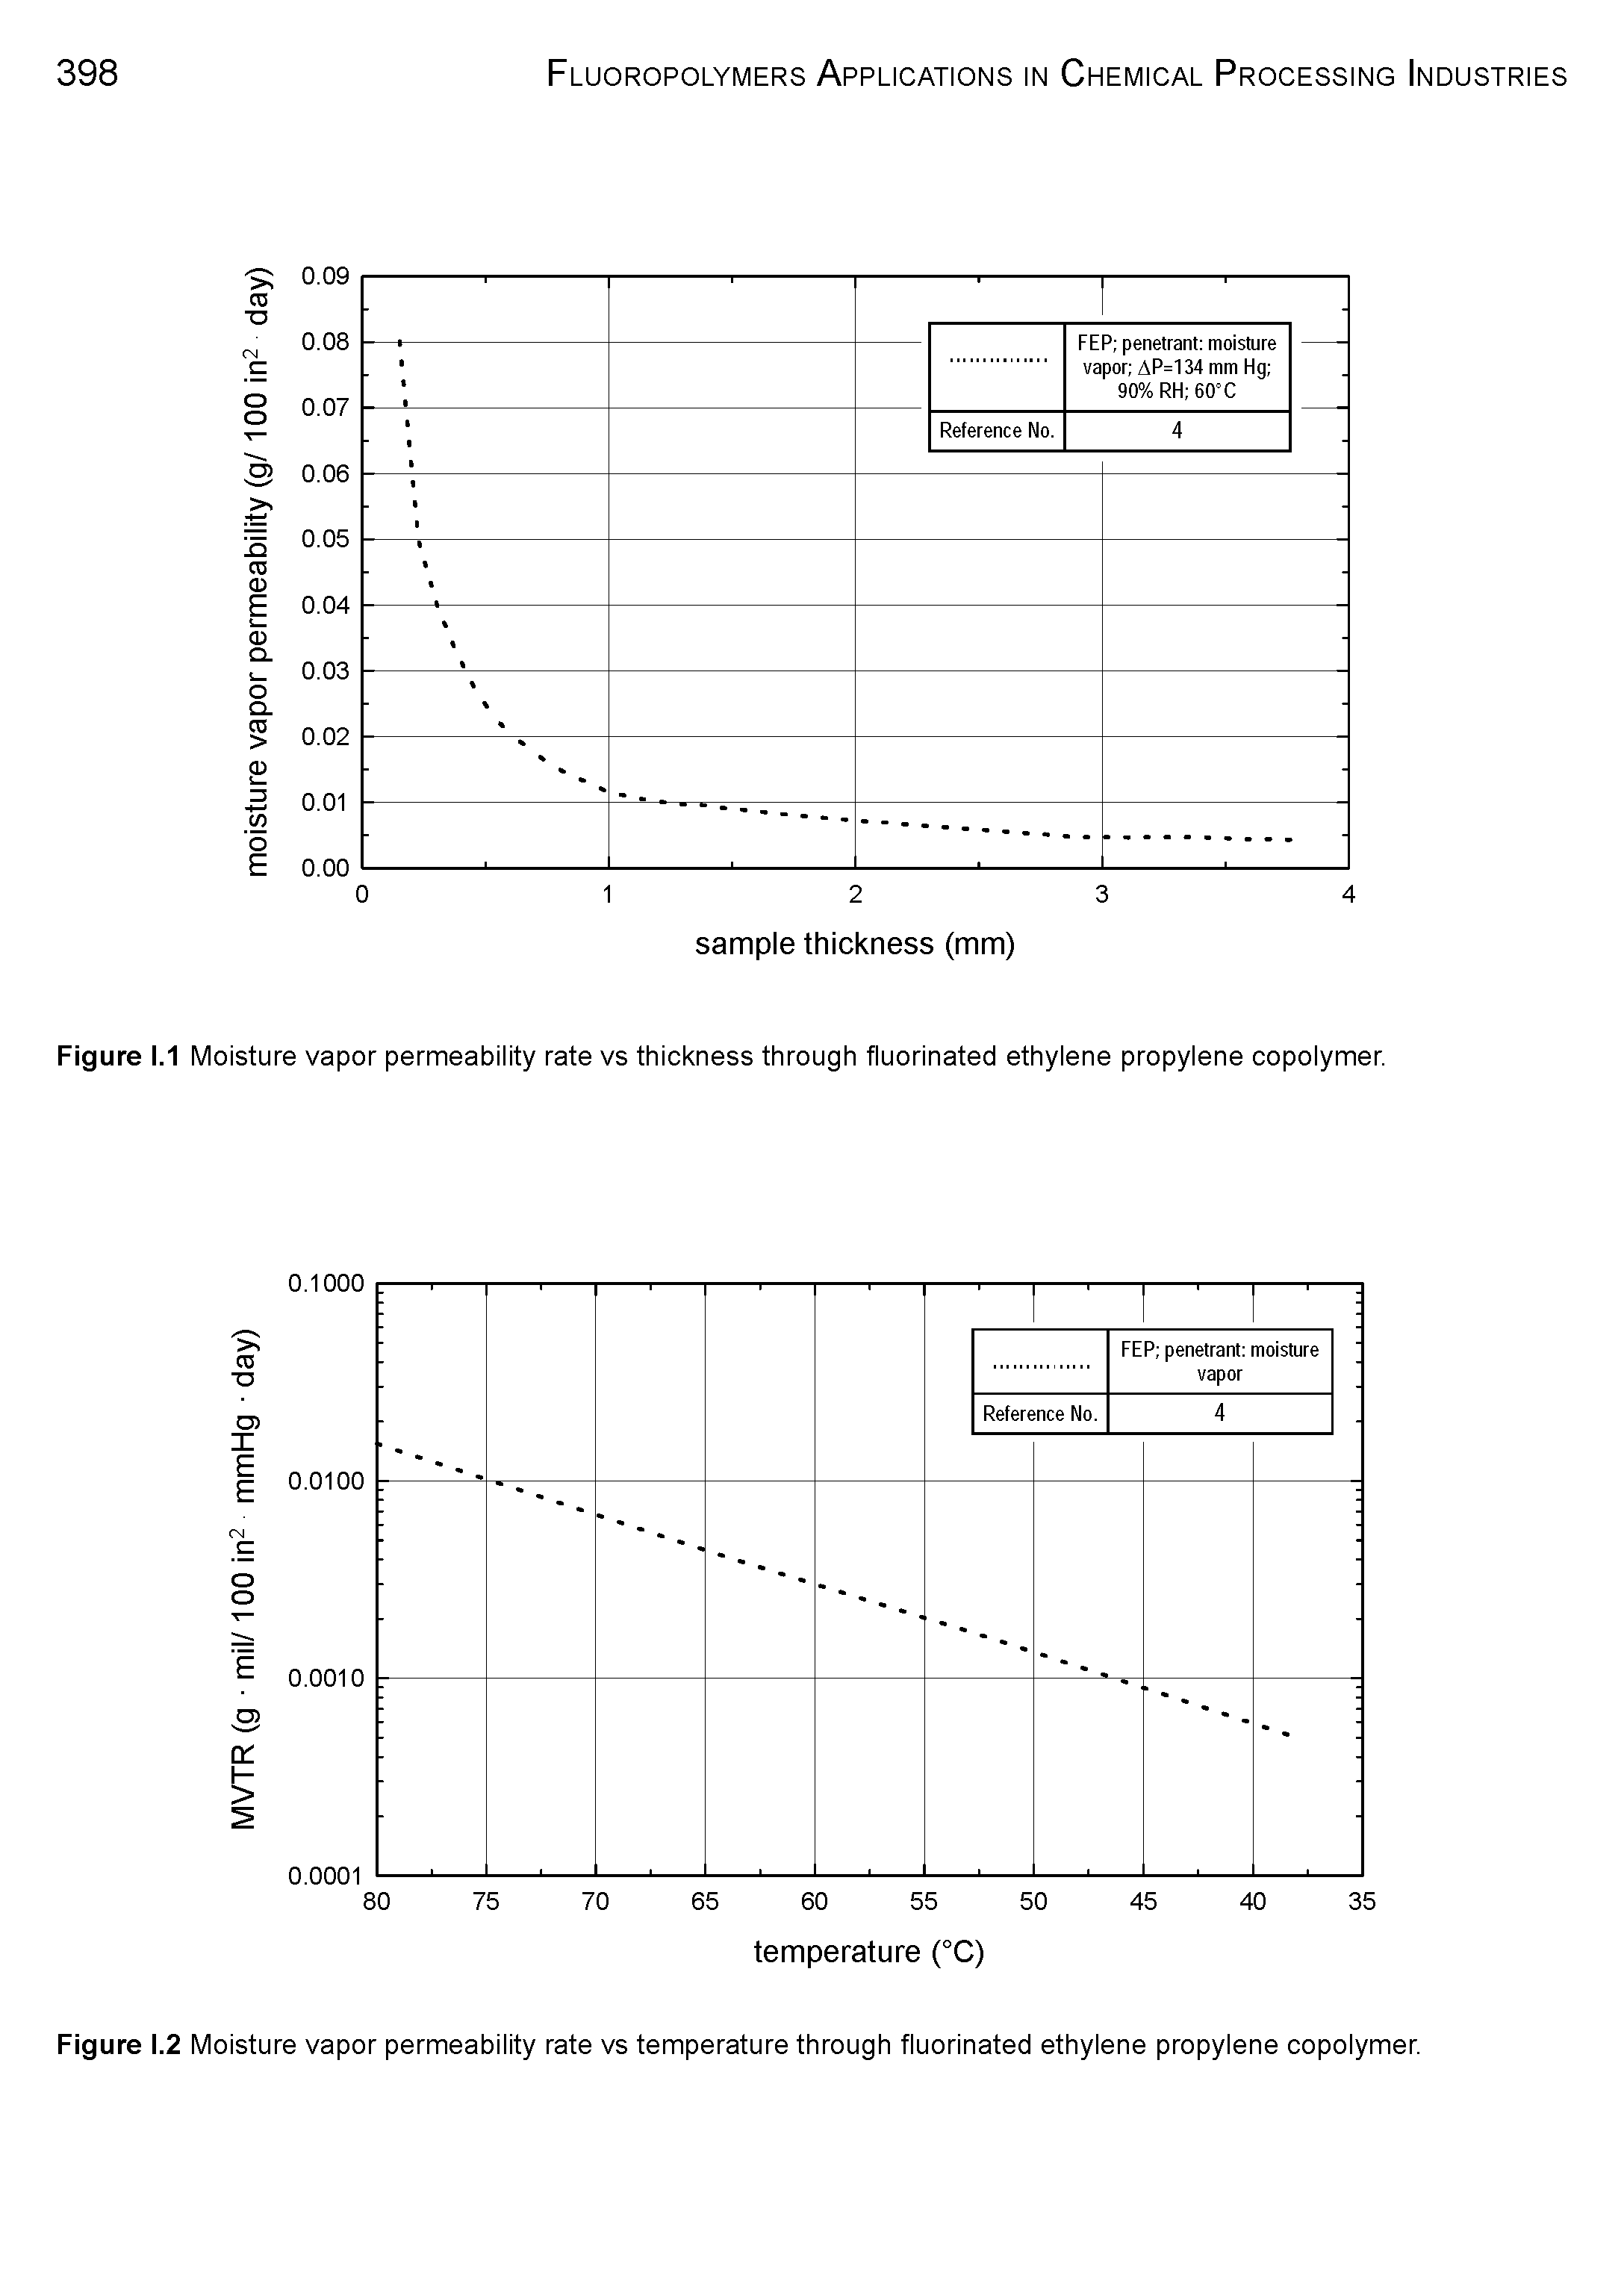 Figure 1.1 Moisture vapor permeability rate vs thickness through fluorinated ethylene propylene copolymer.